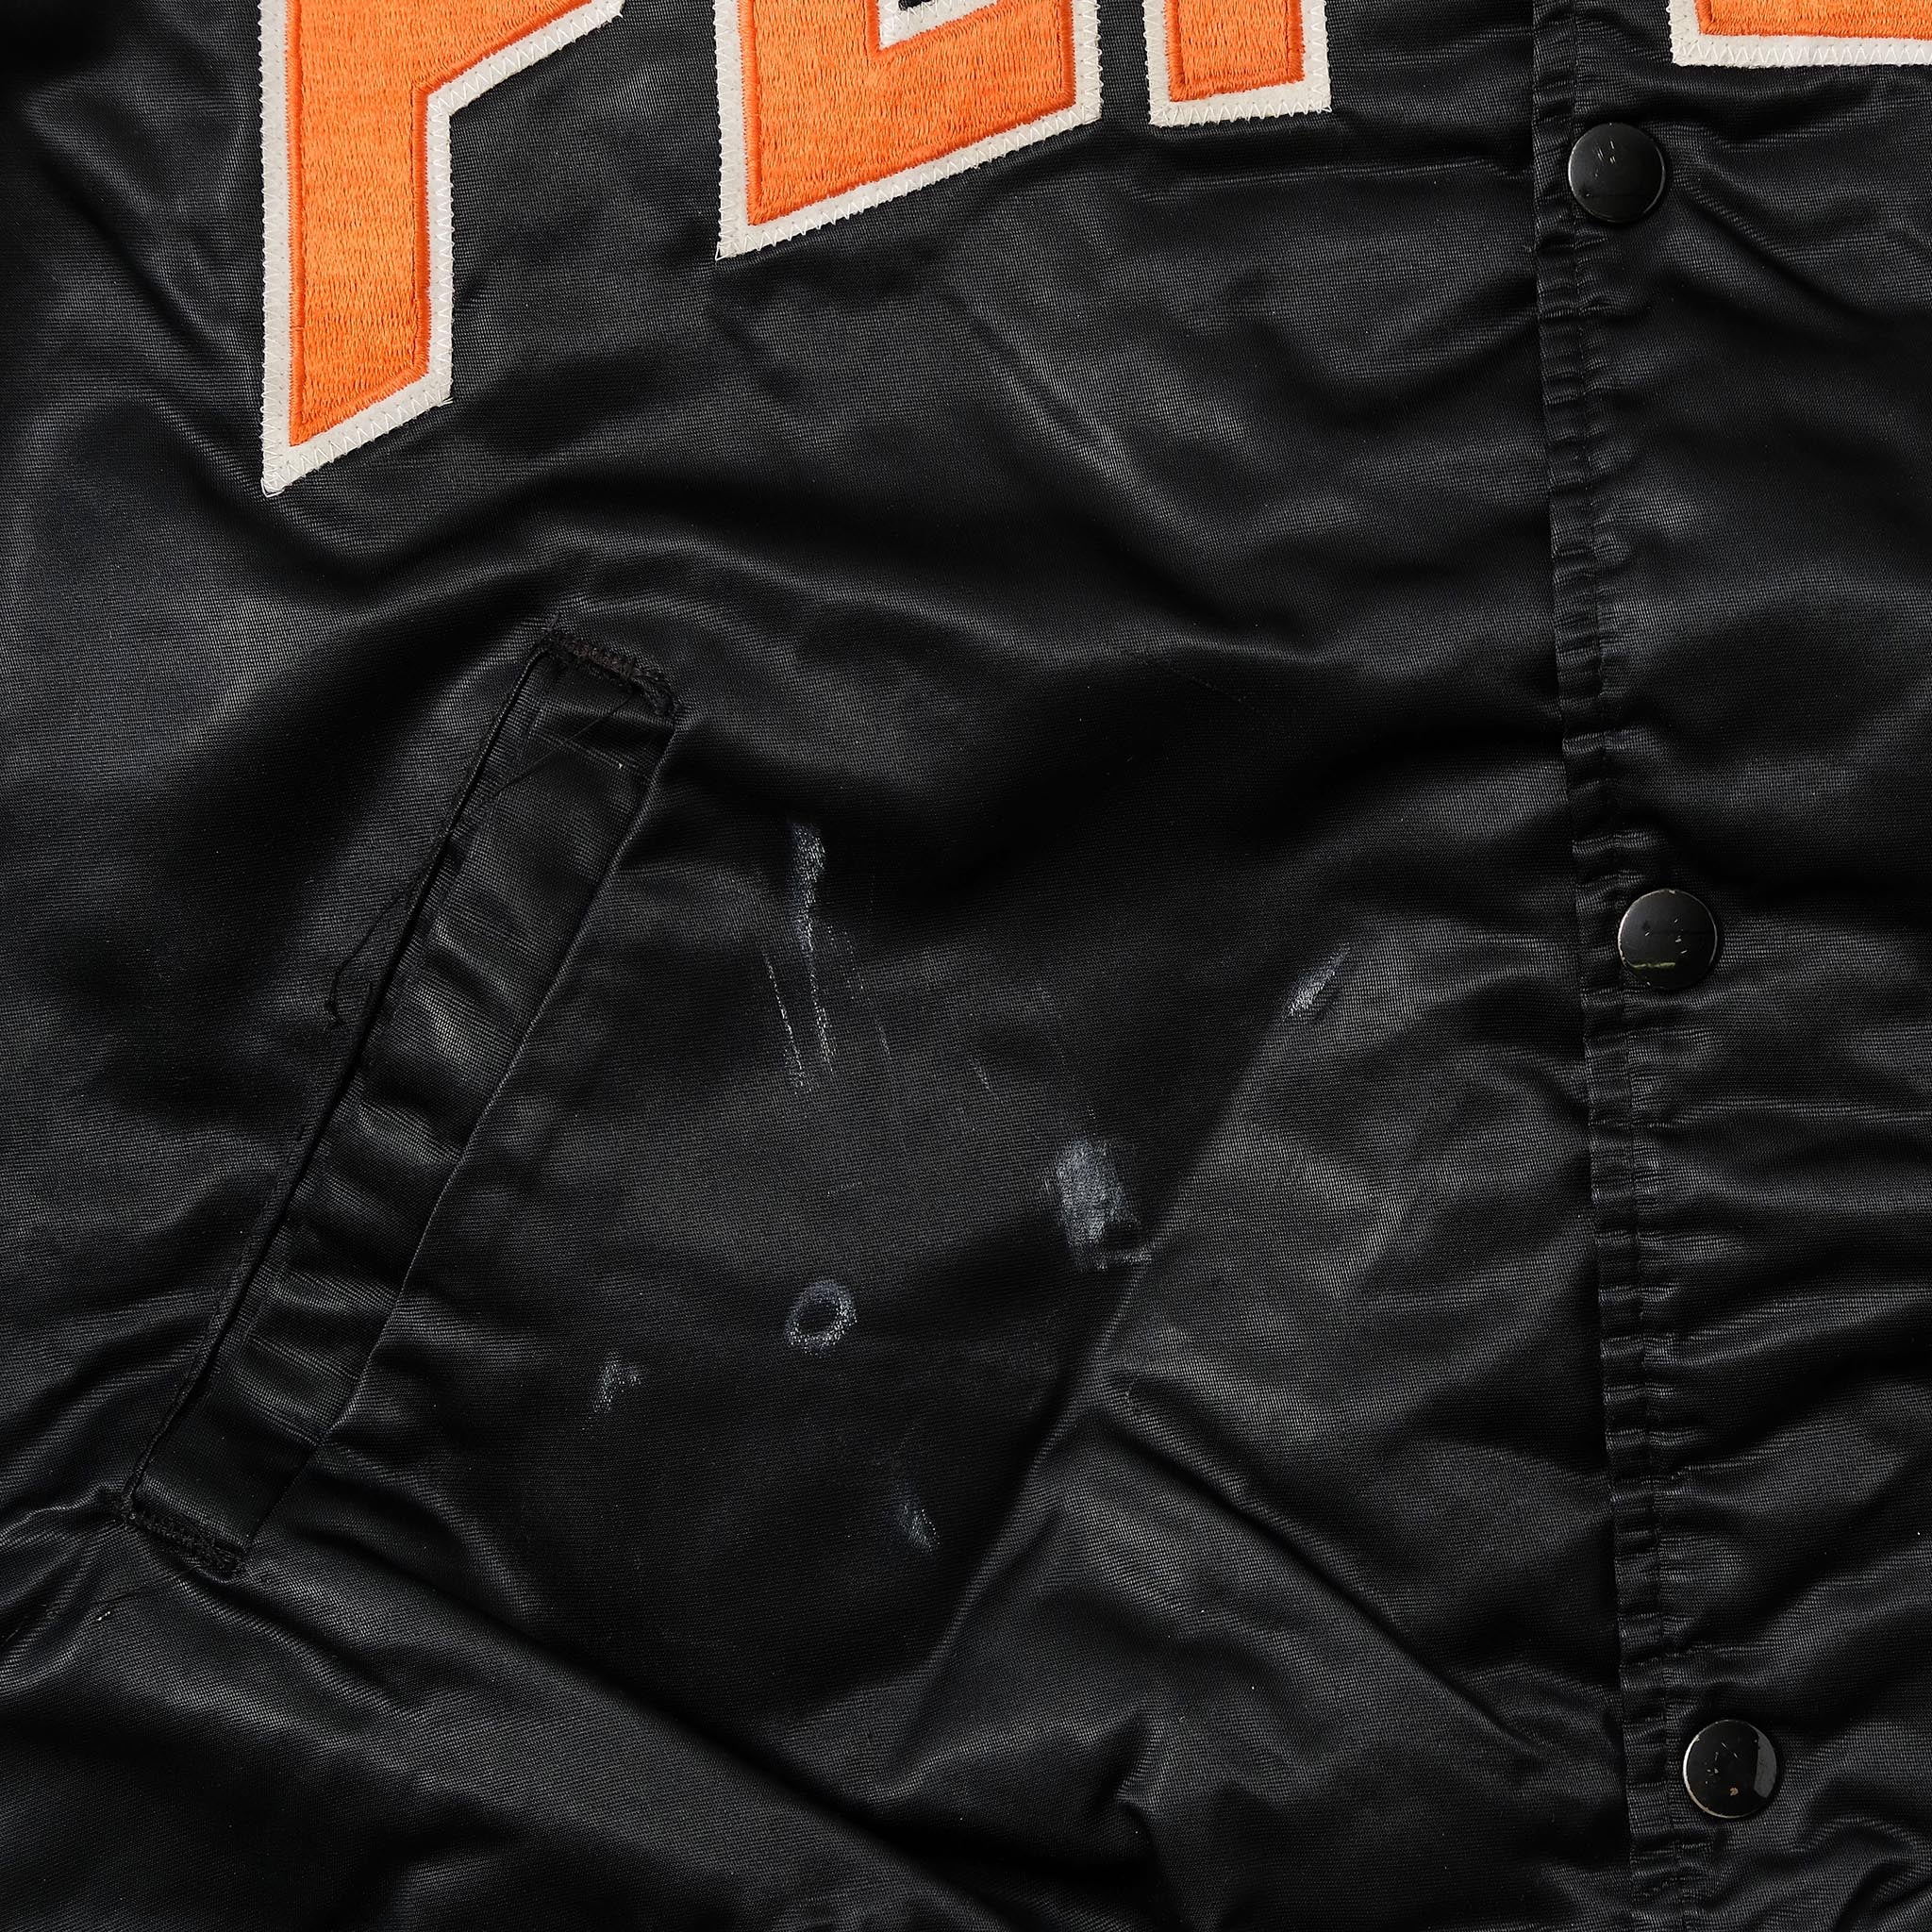 90's Philadelphia Flyers Starter NHL Satin Bomber Jacket Size Medium – Rare  VNTG